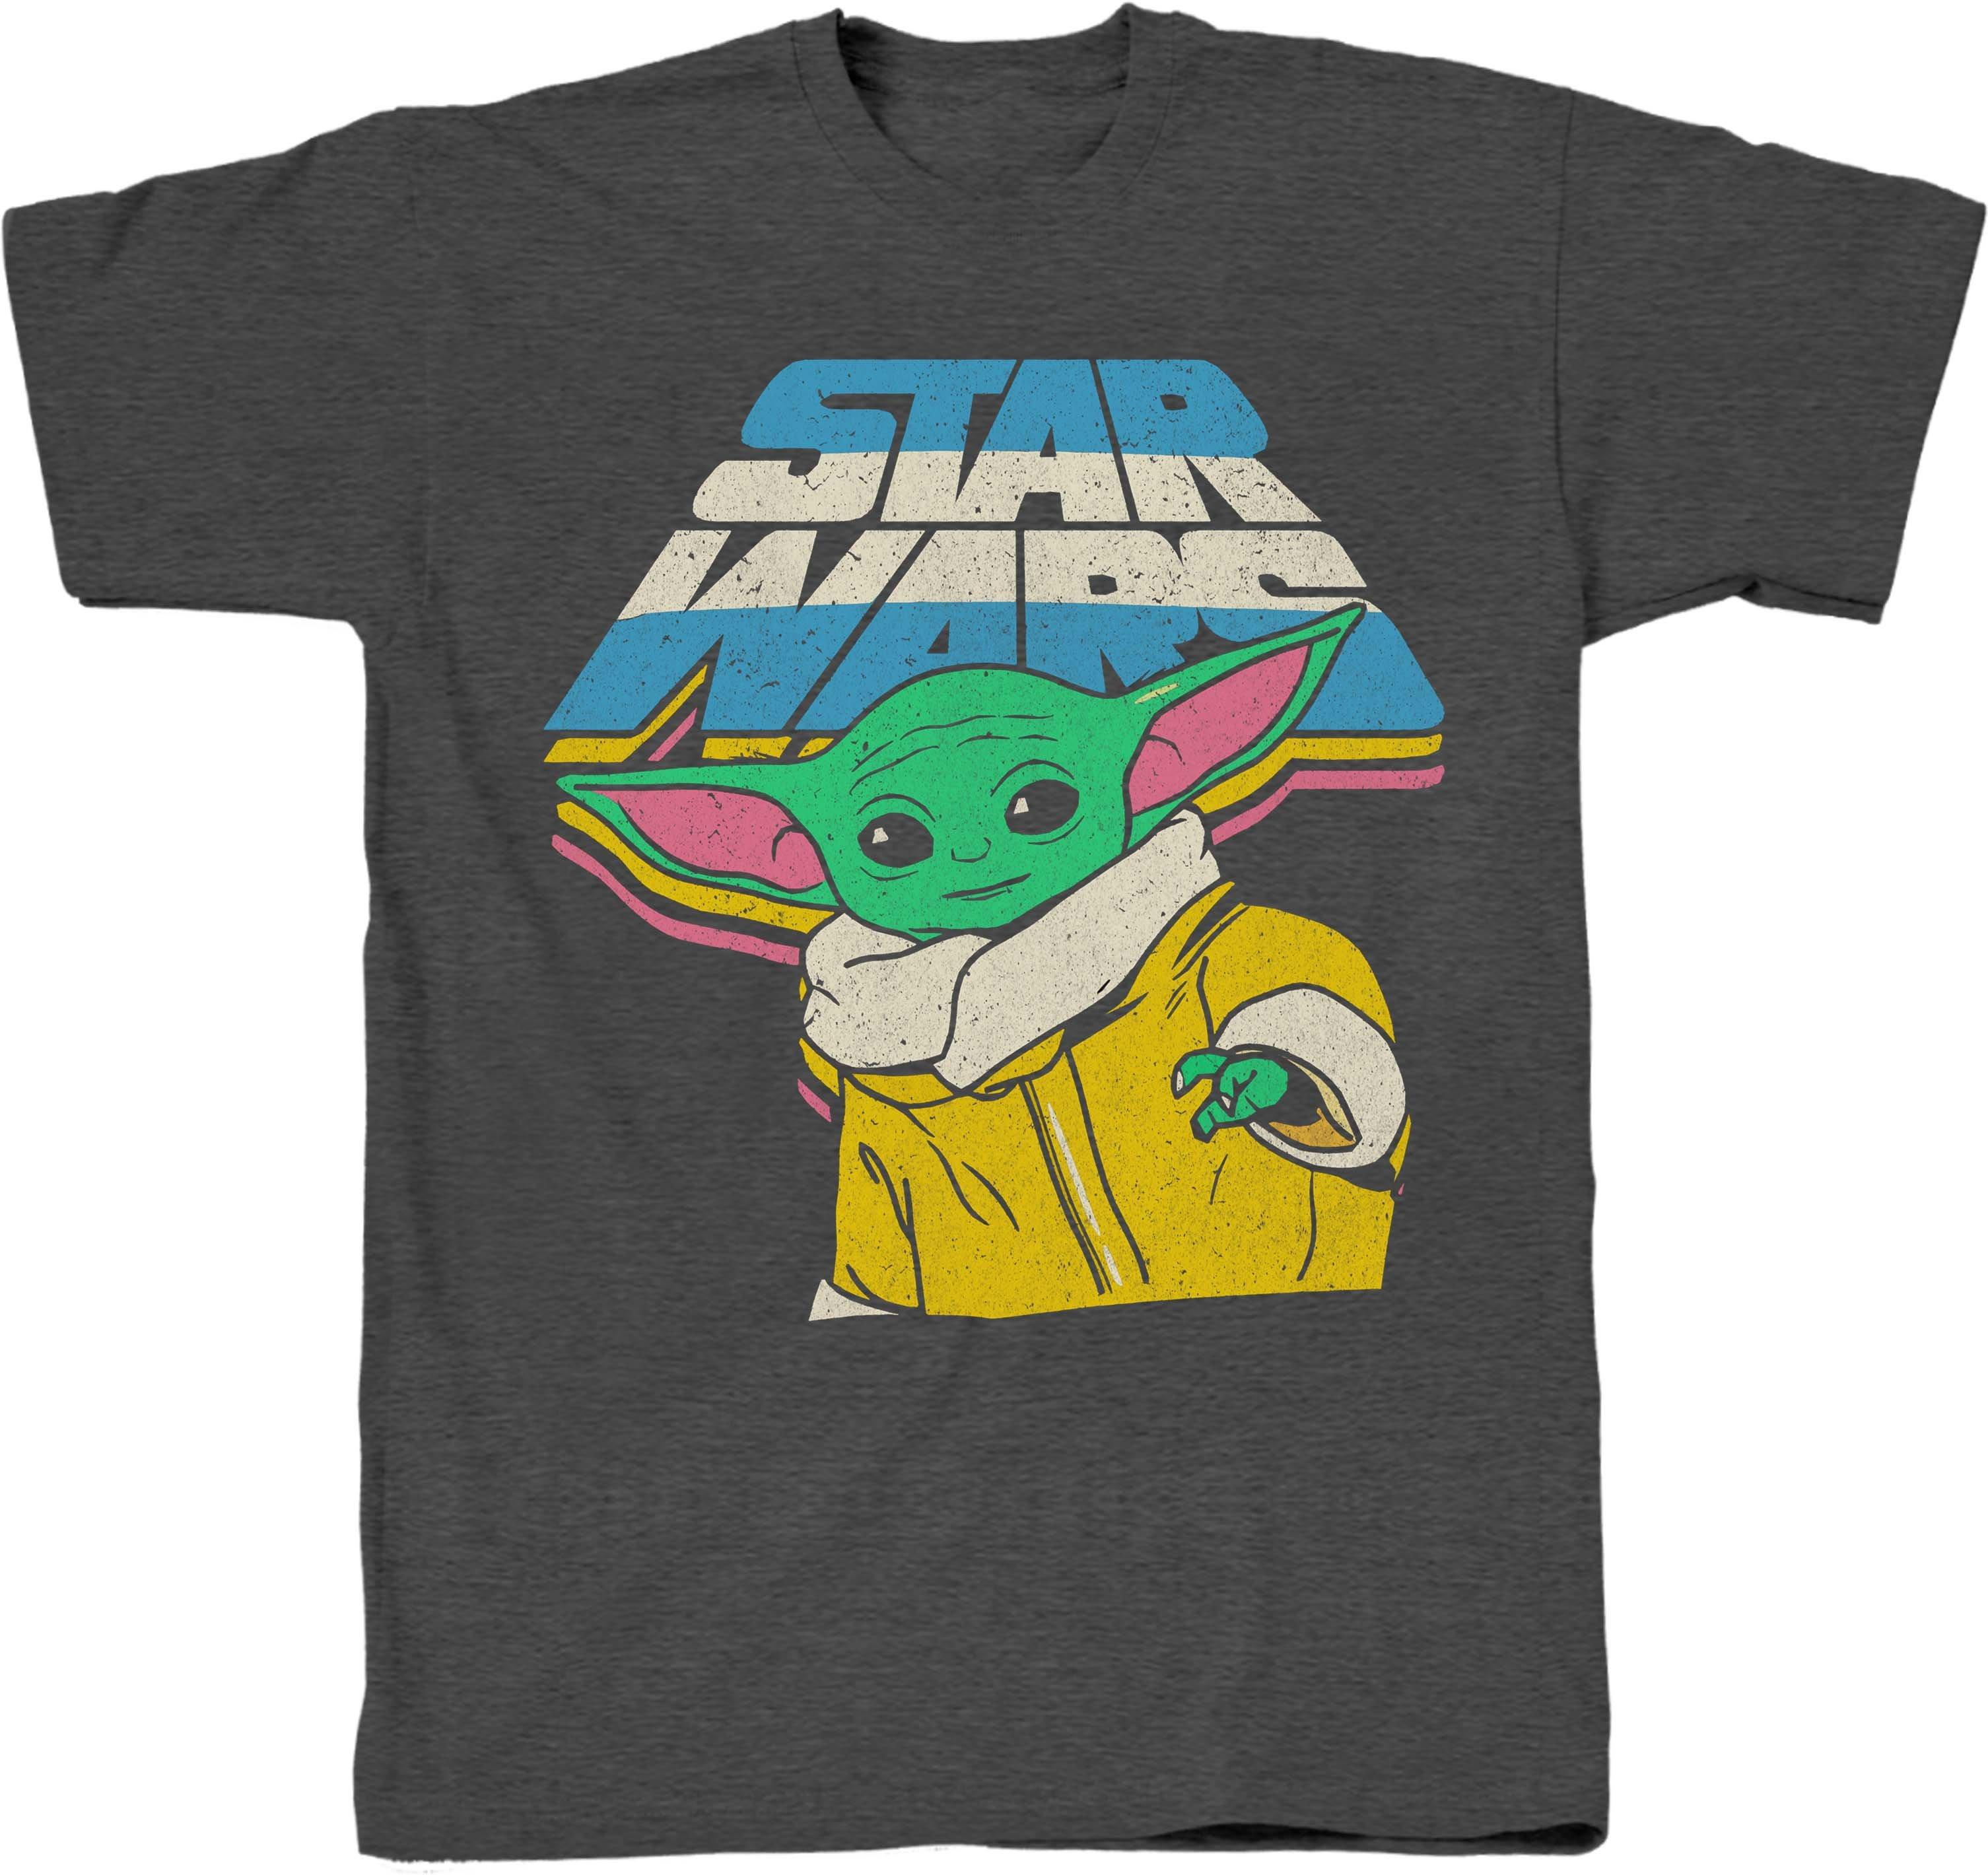 Star Wars Grogu Name Drop T-Shirt GameStop Exclusive